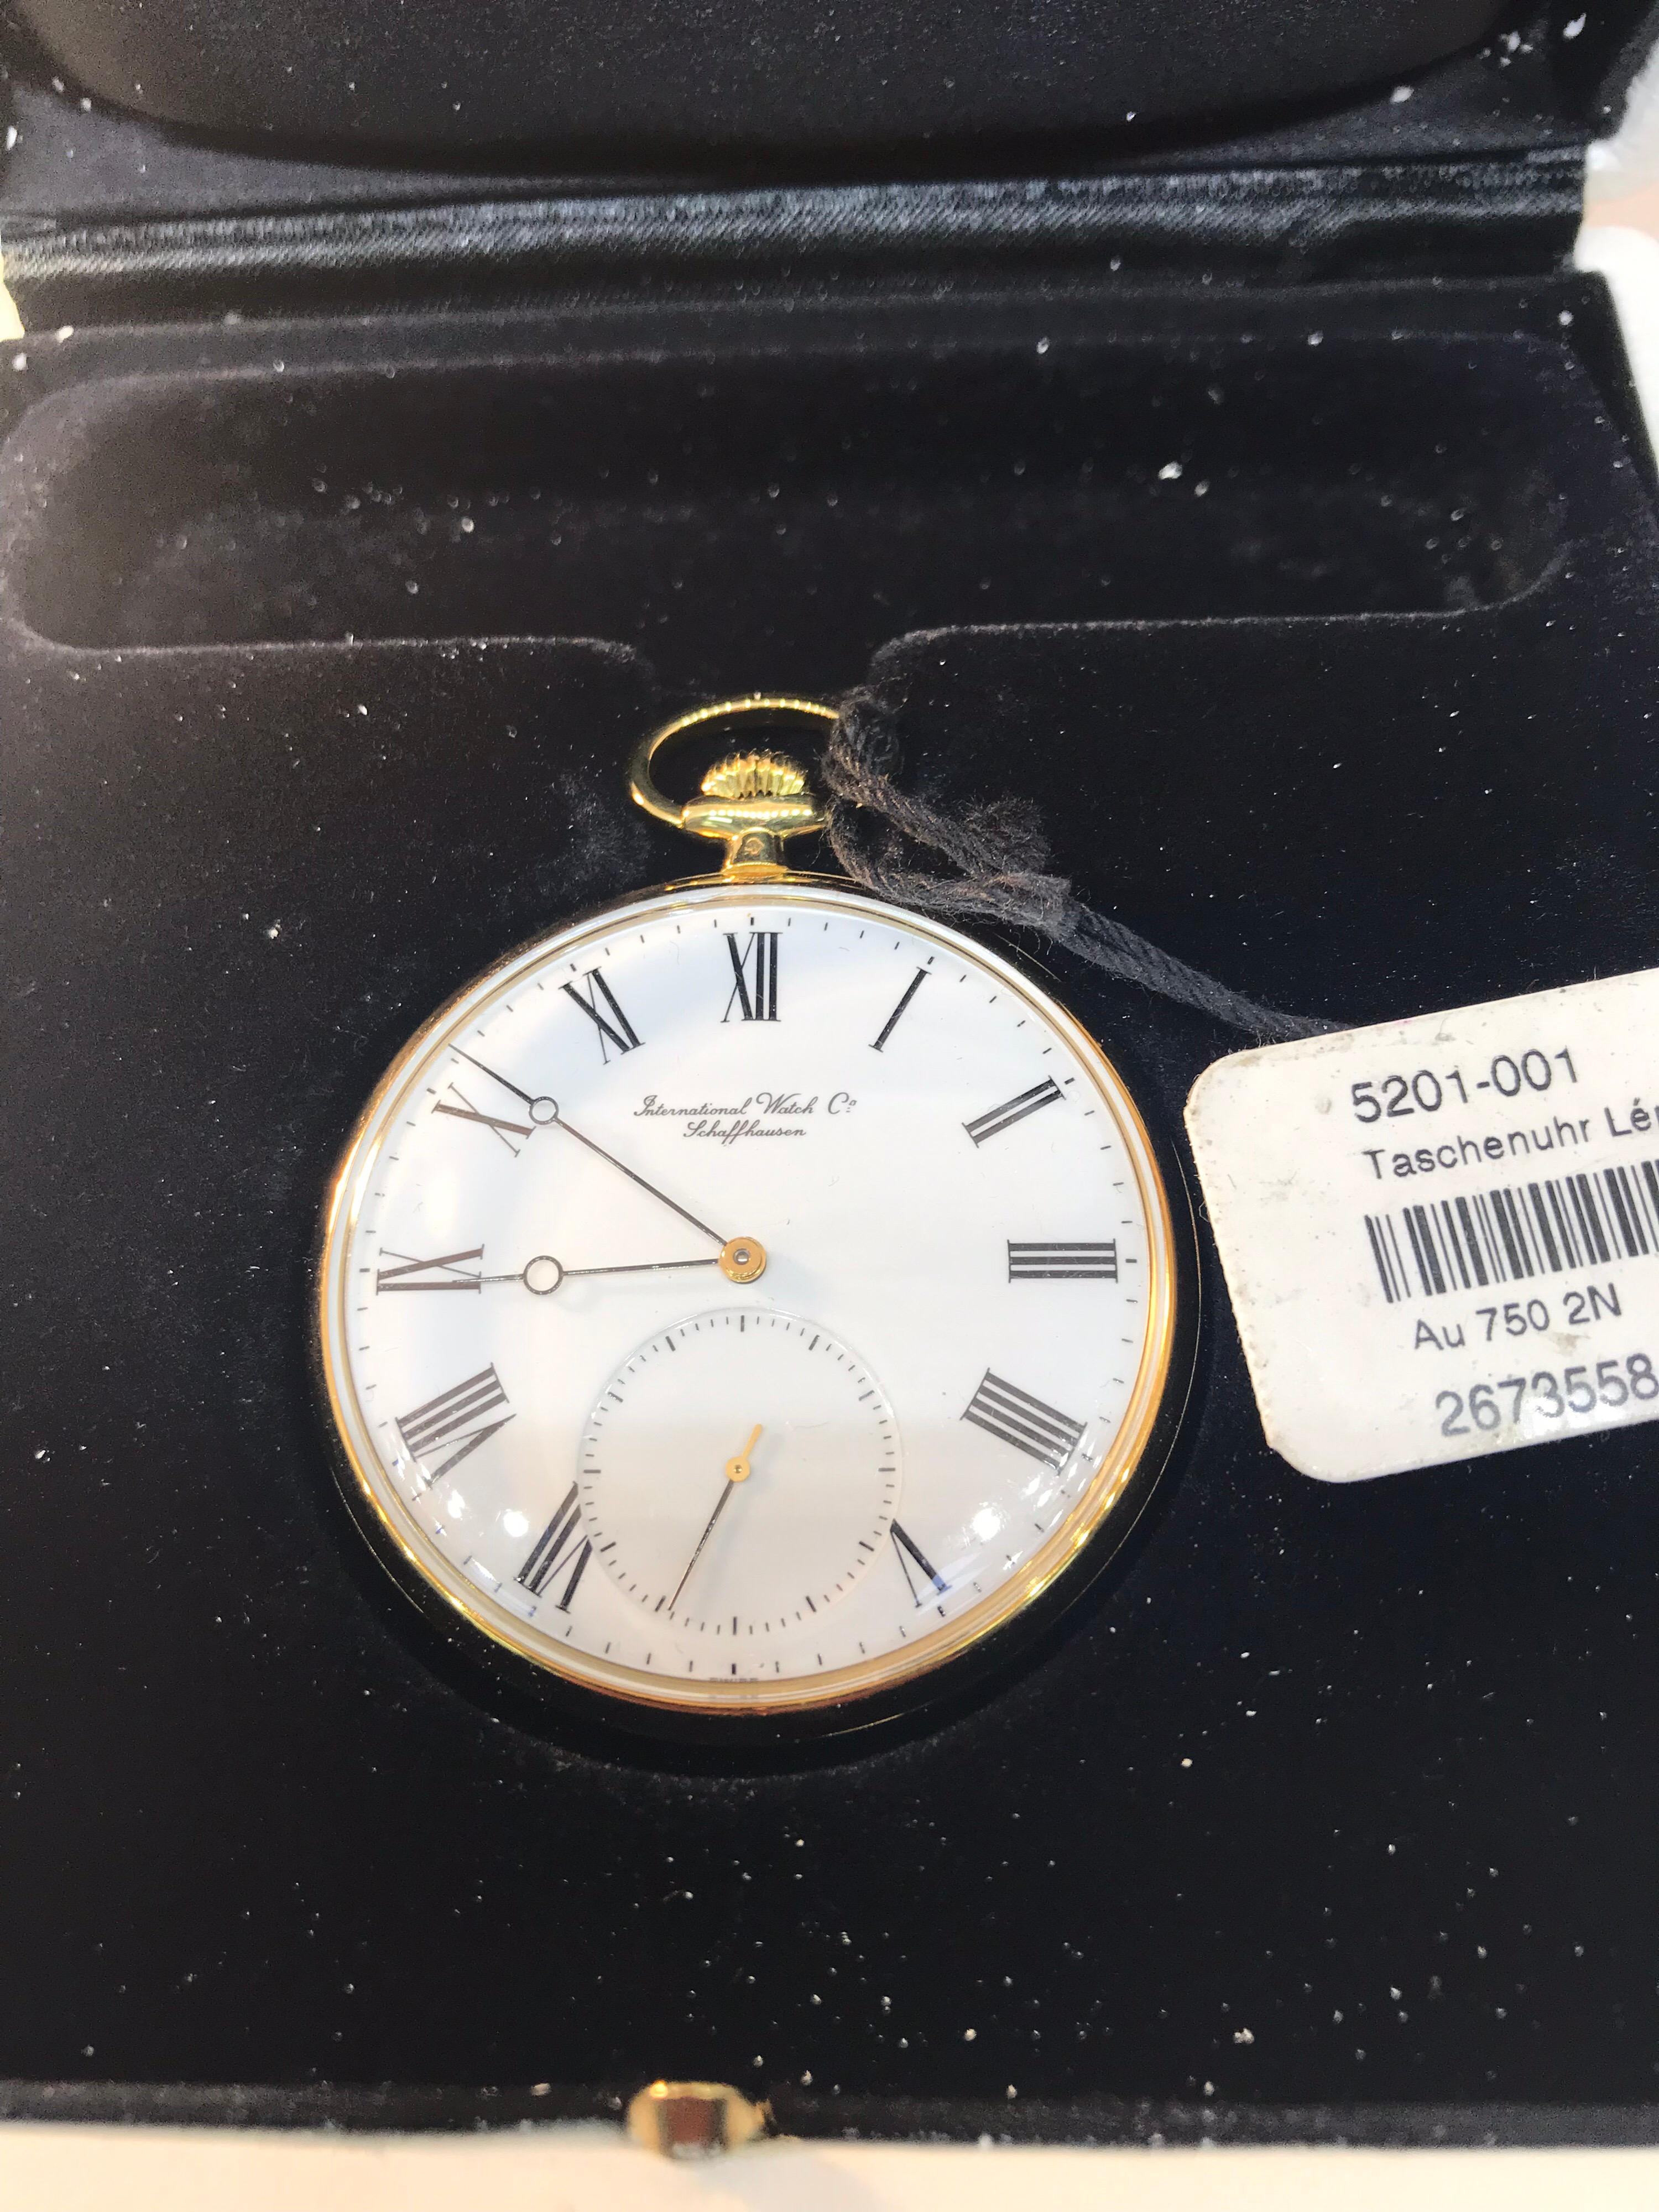 IWC Schaffhausen Lepine Yellow Gold White Dial Pocket Watch Men's Watch 5201-001 For Sale 2